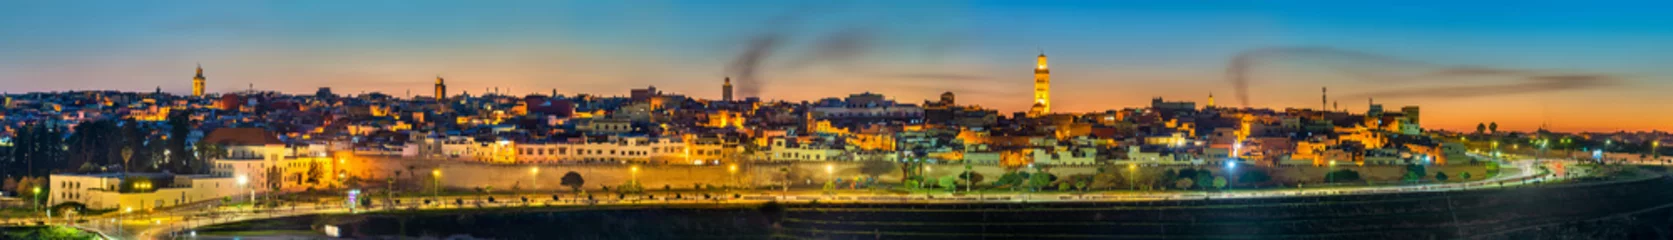 Fotobehang Panorama van Meknes in de avond - Marokko © Leonid Andronov